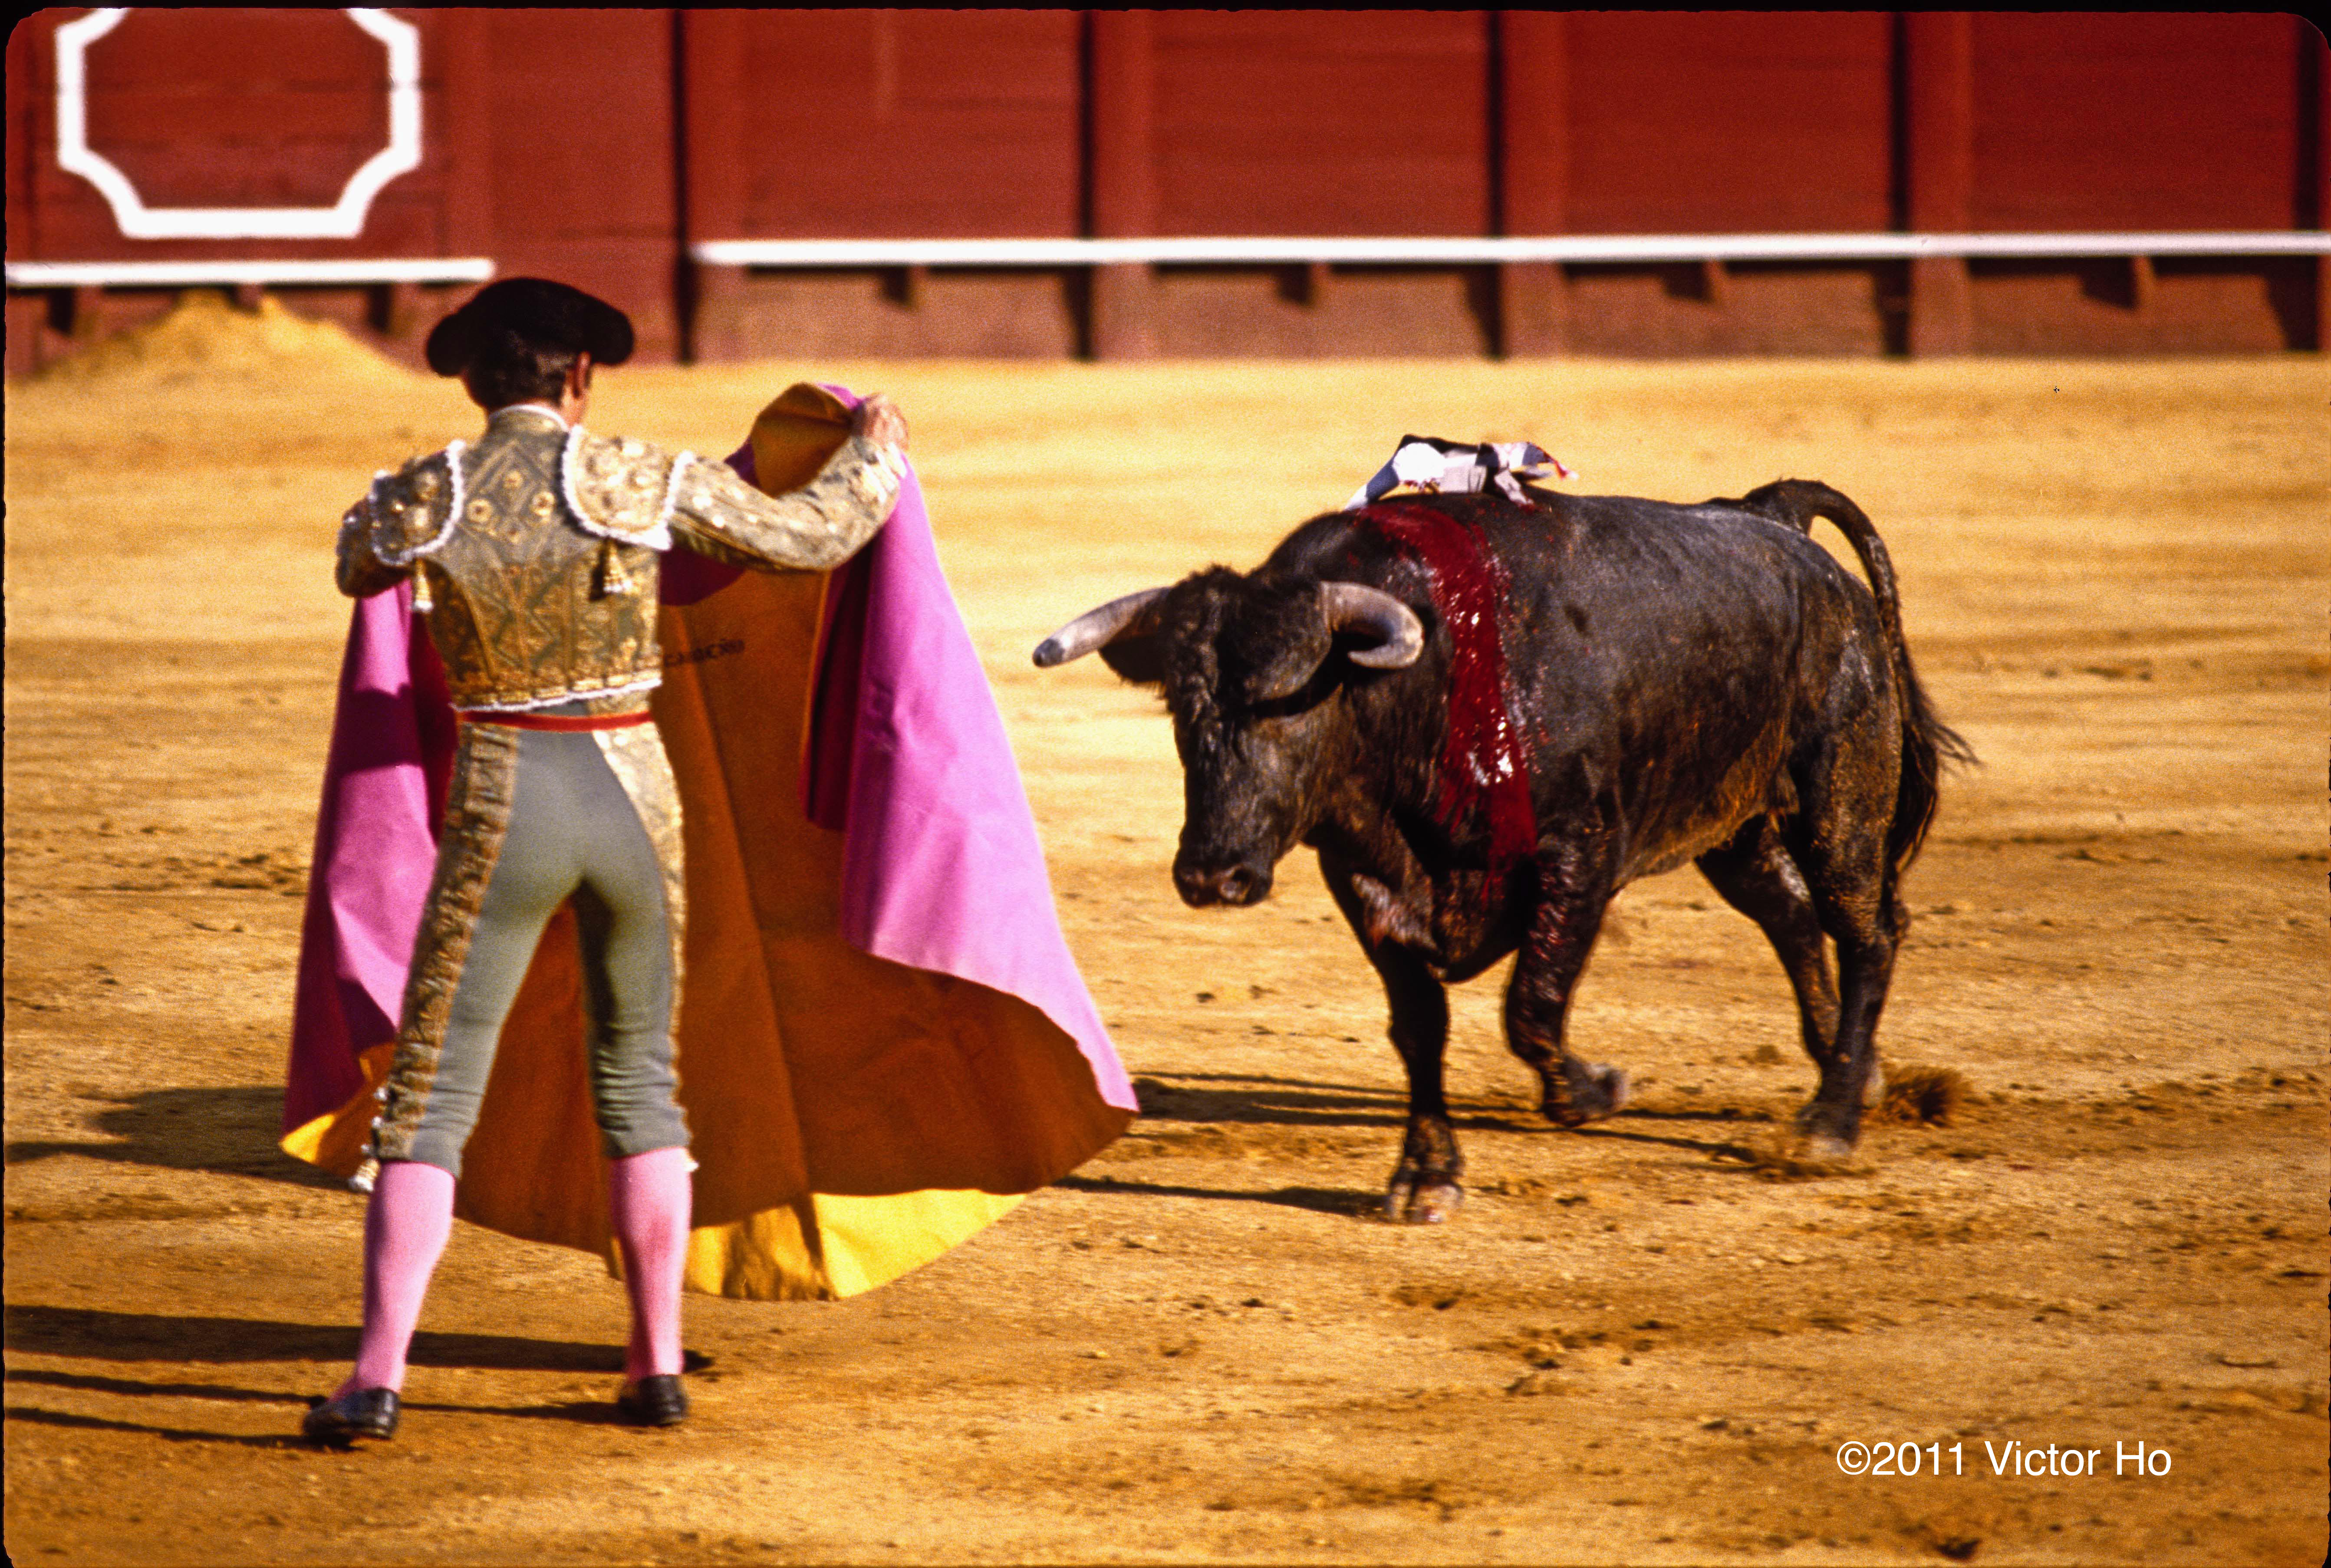 Bullfighting Image Thecelebritypix